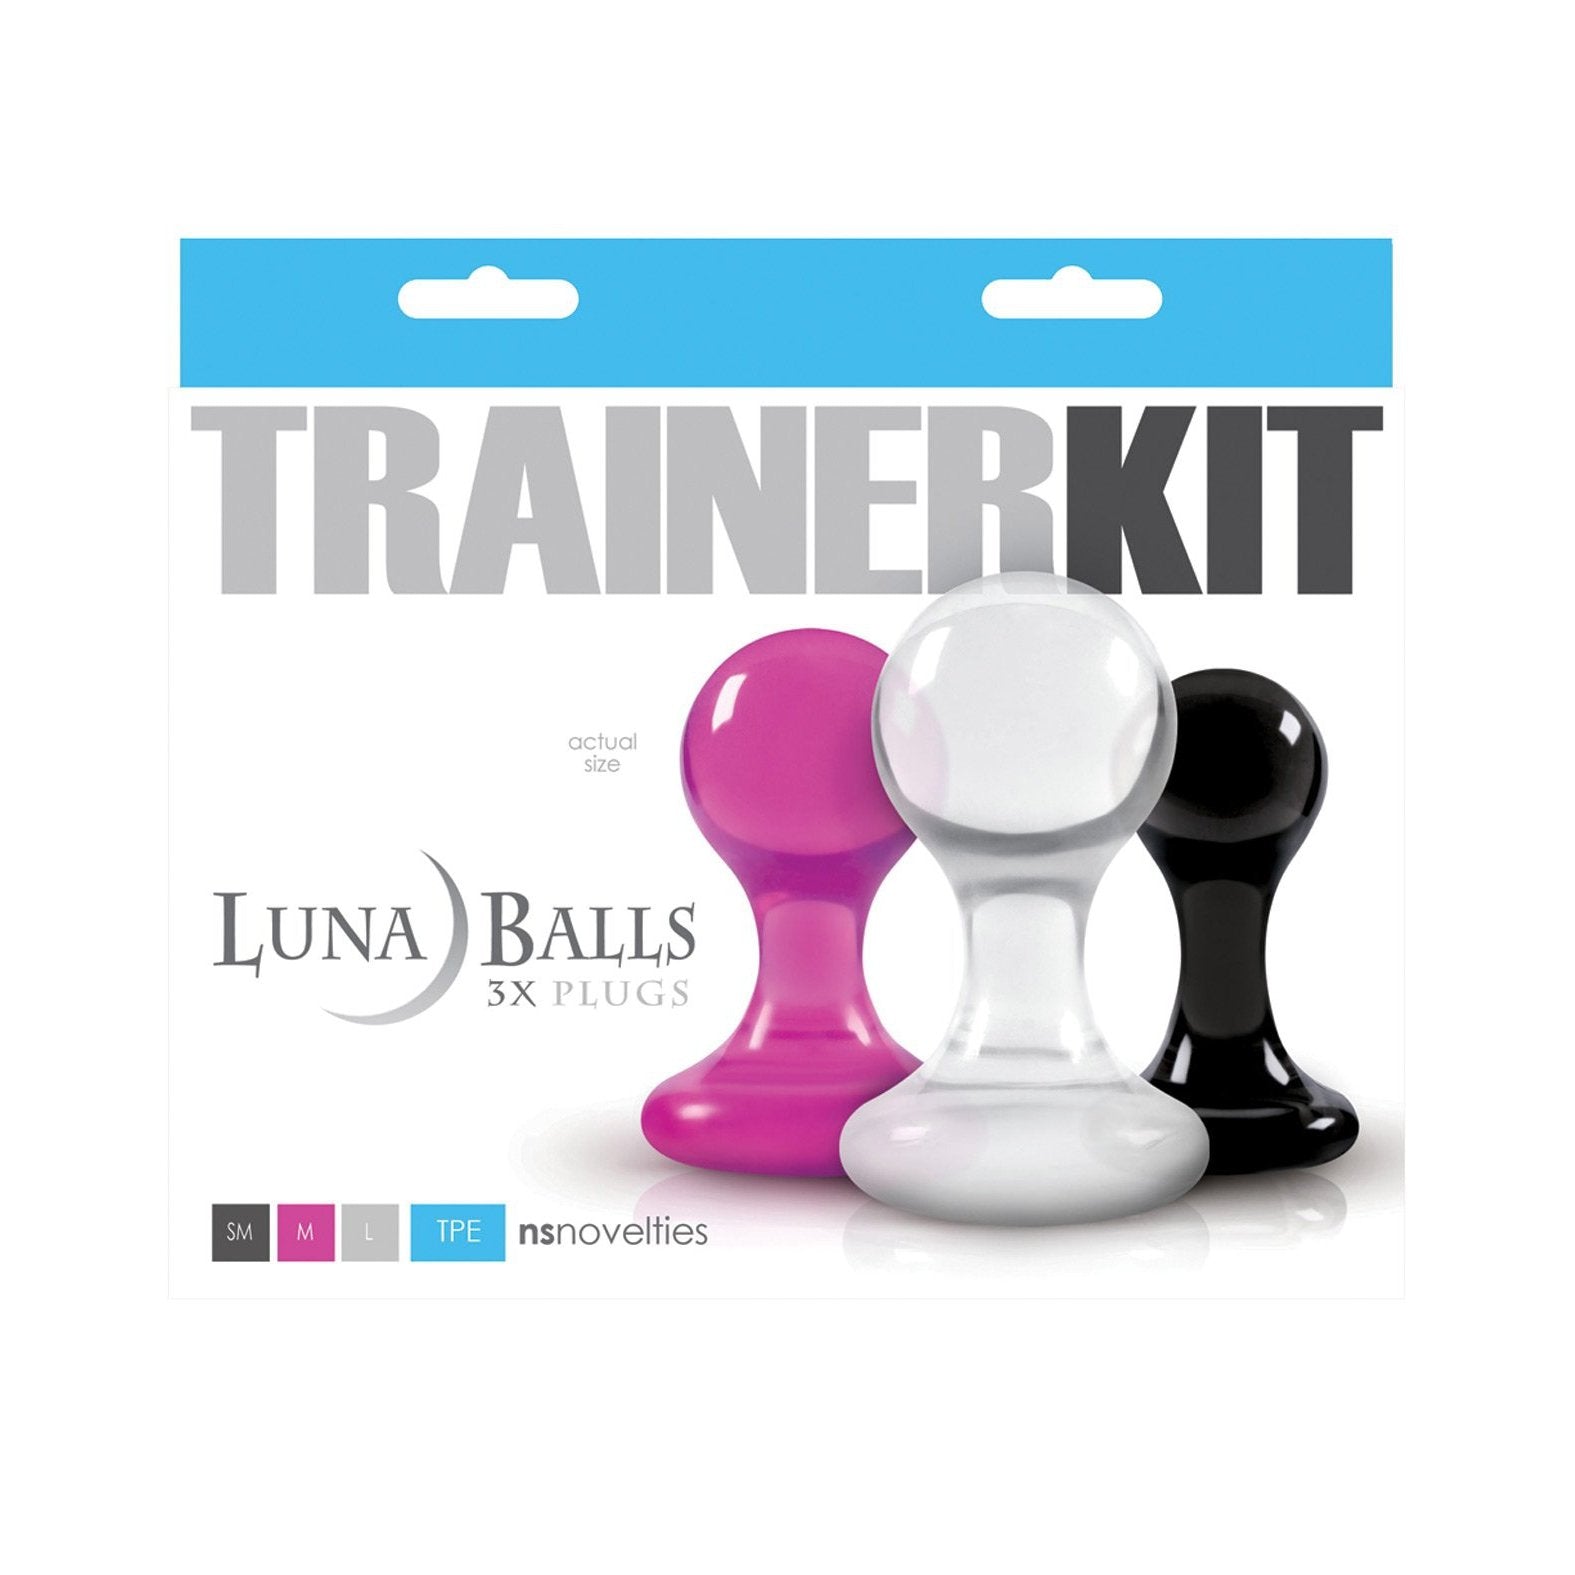 NS Novelties Luna Balls Trainer Kit